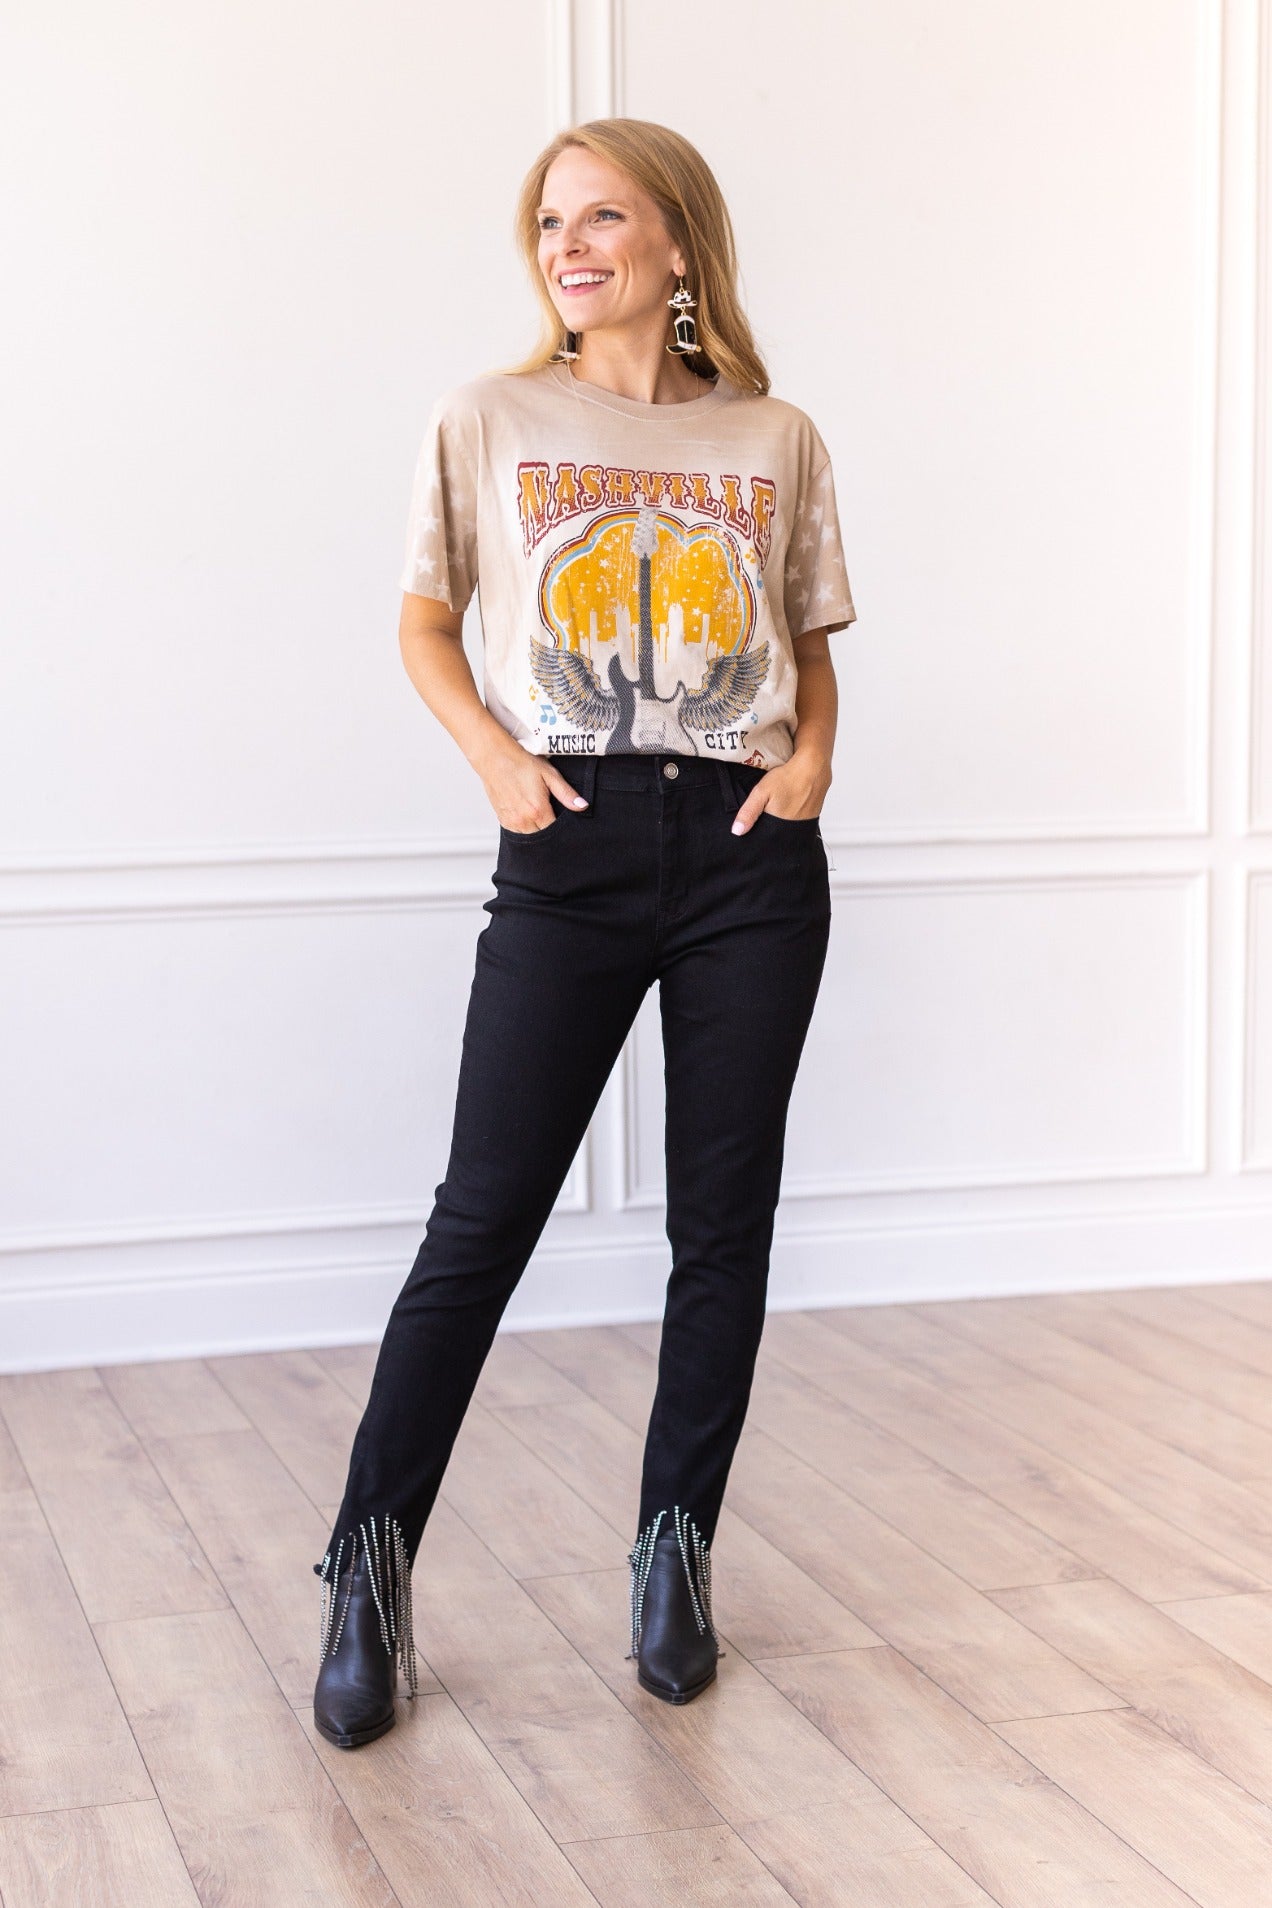 The Gemma Black Skinny Jeans with Rhinestone Fringe Detail